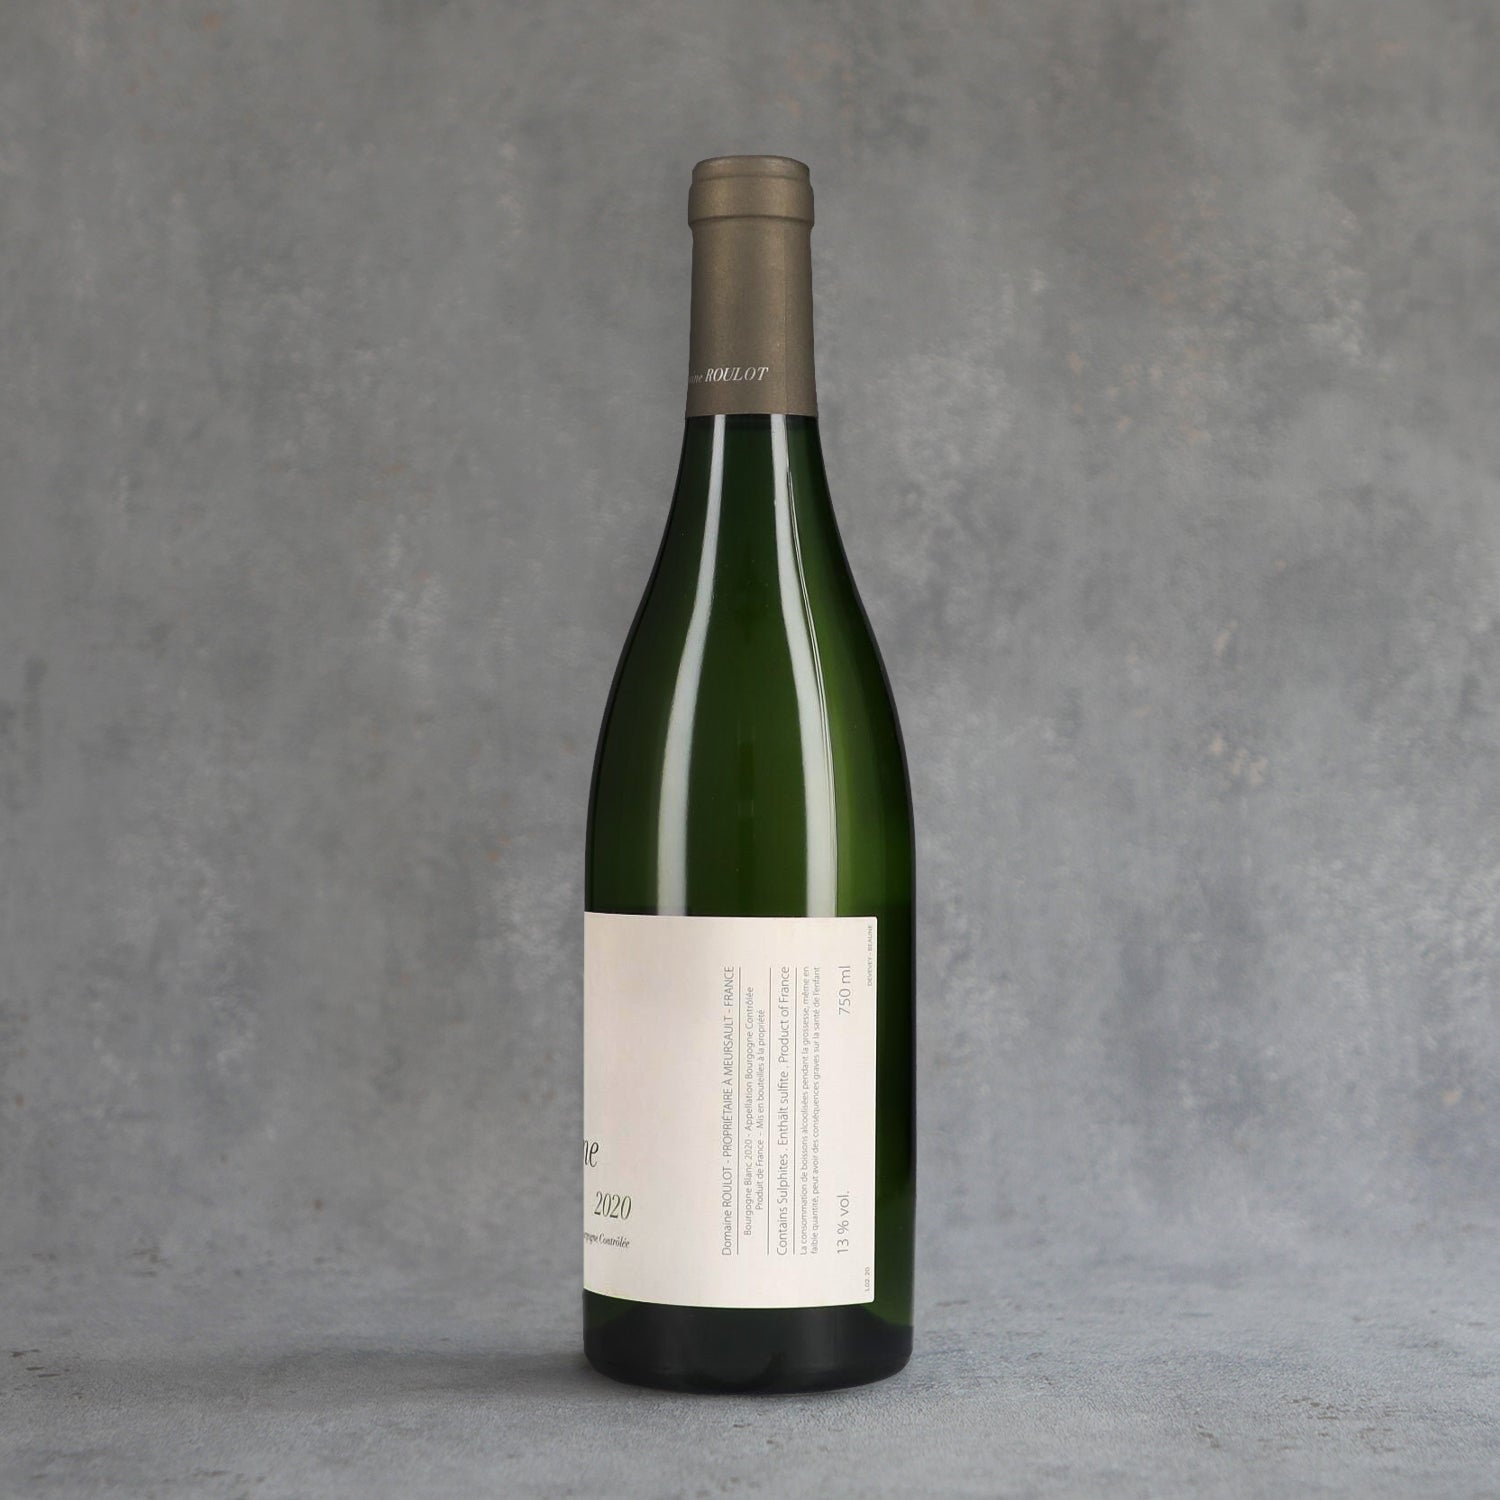 Domaine Roulot Bourgogne Blanc 2020 750ml